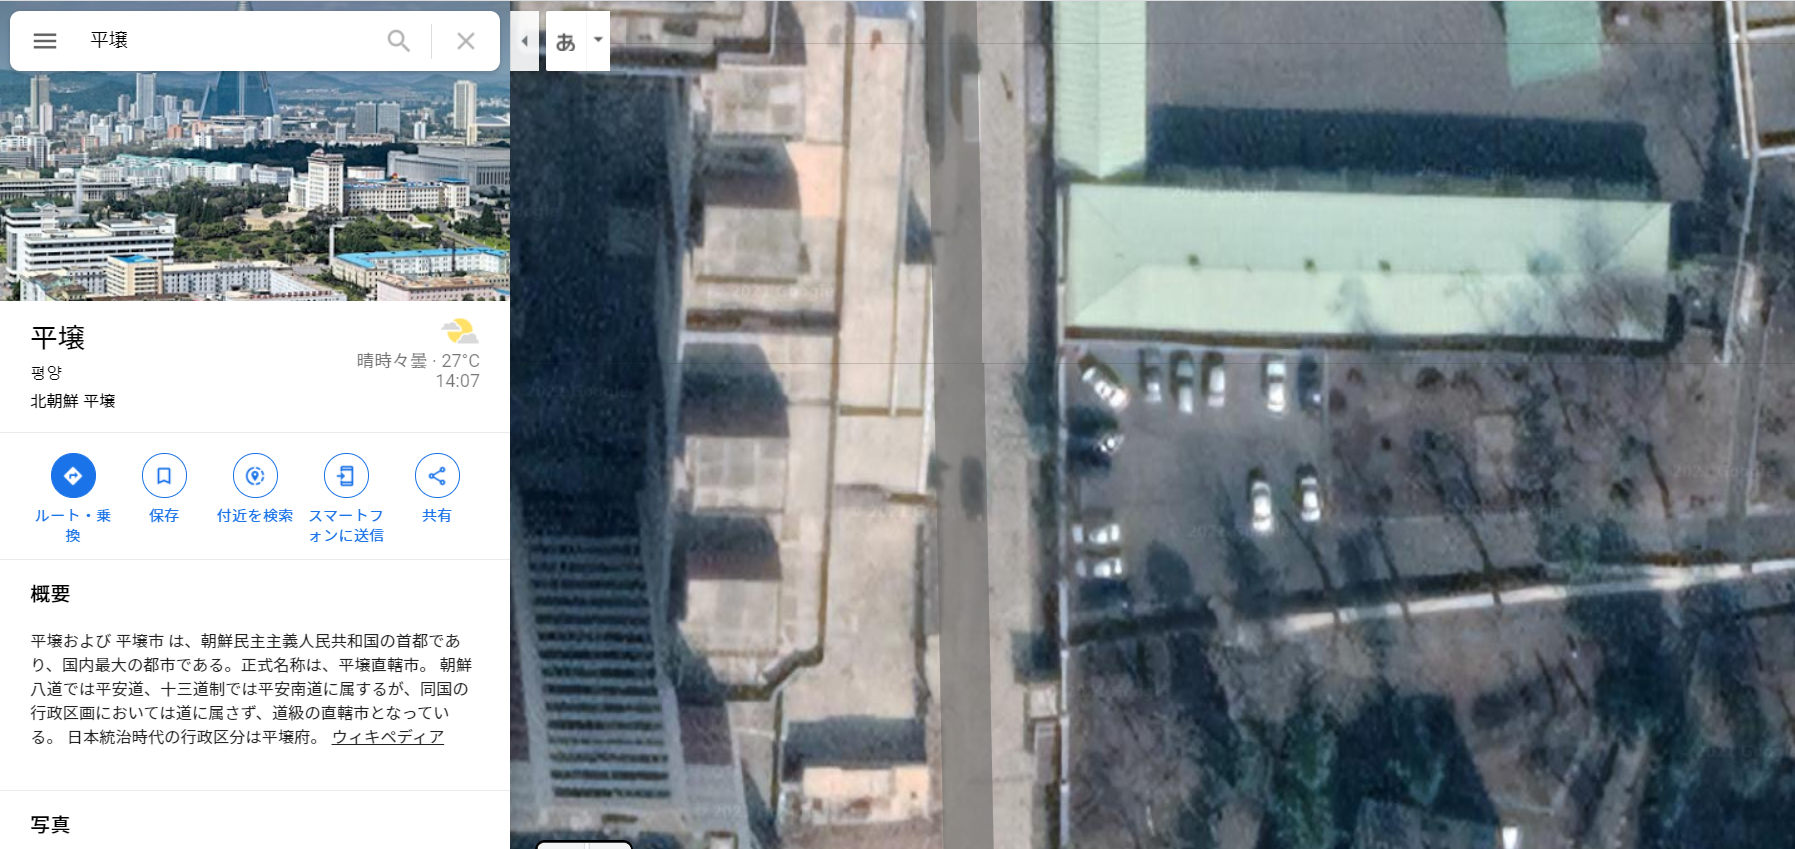 Googleマップでガザ地区の衛星写真の解像度が極端に低すぎるという問題 Gigazine